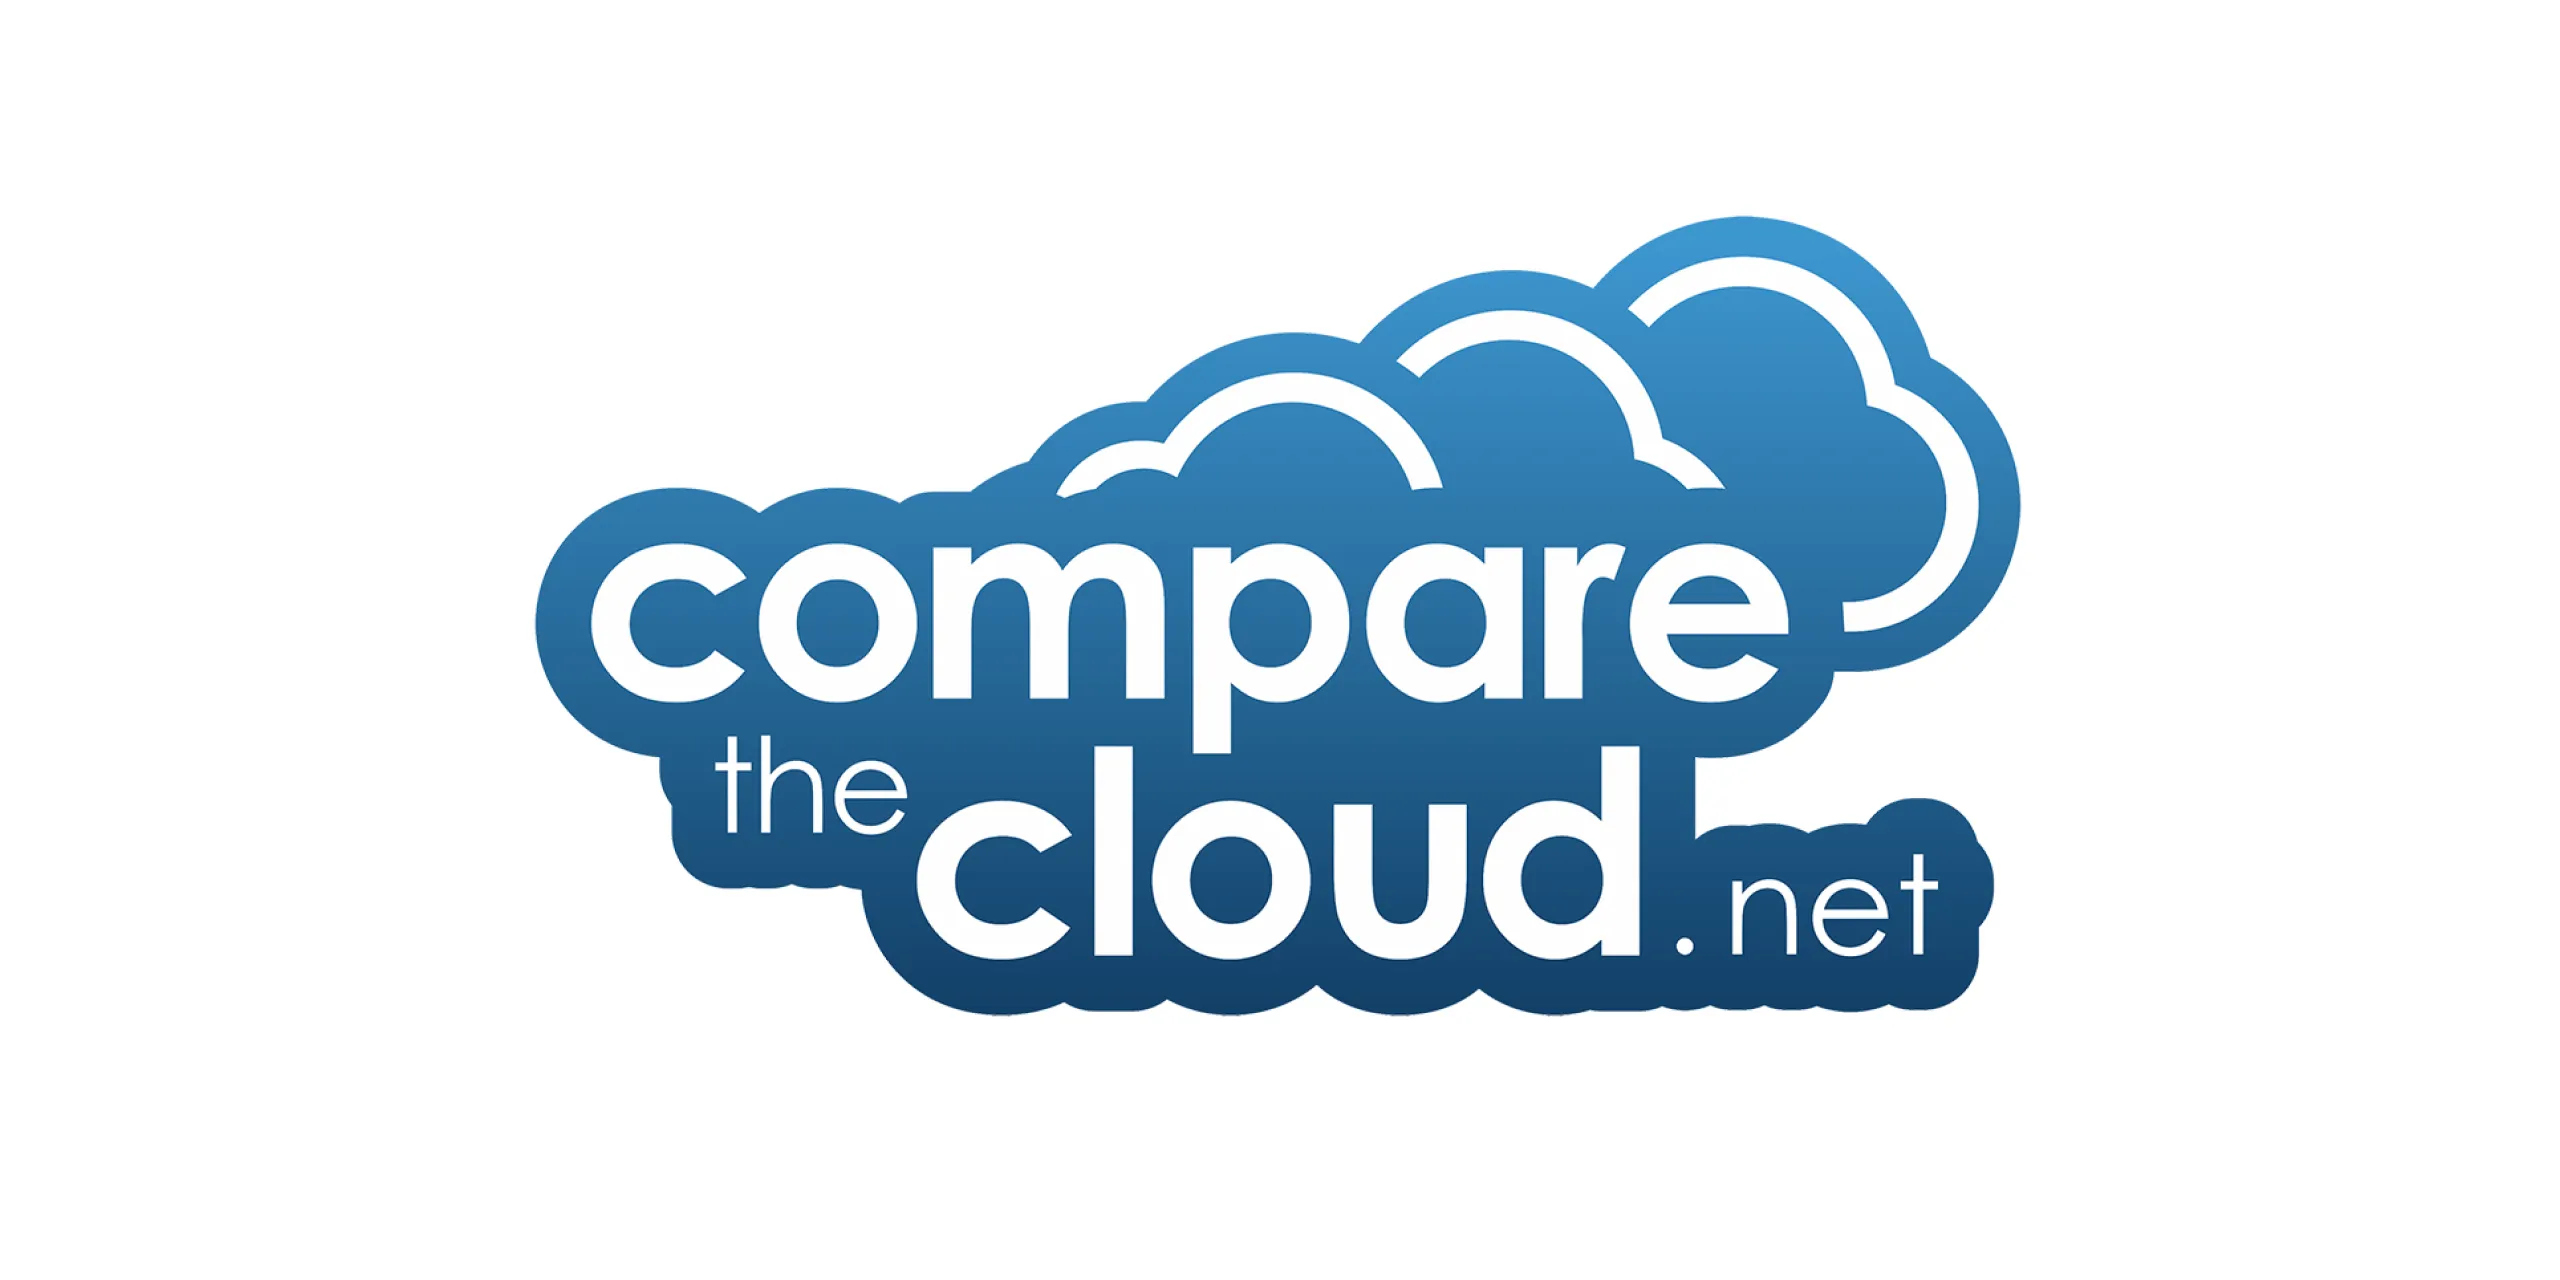 compare the cloud logo